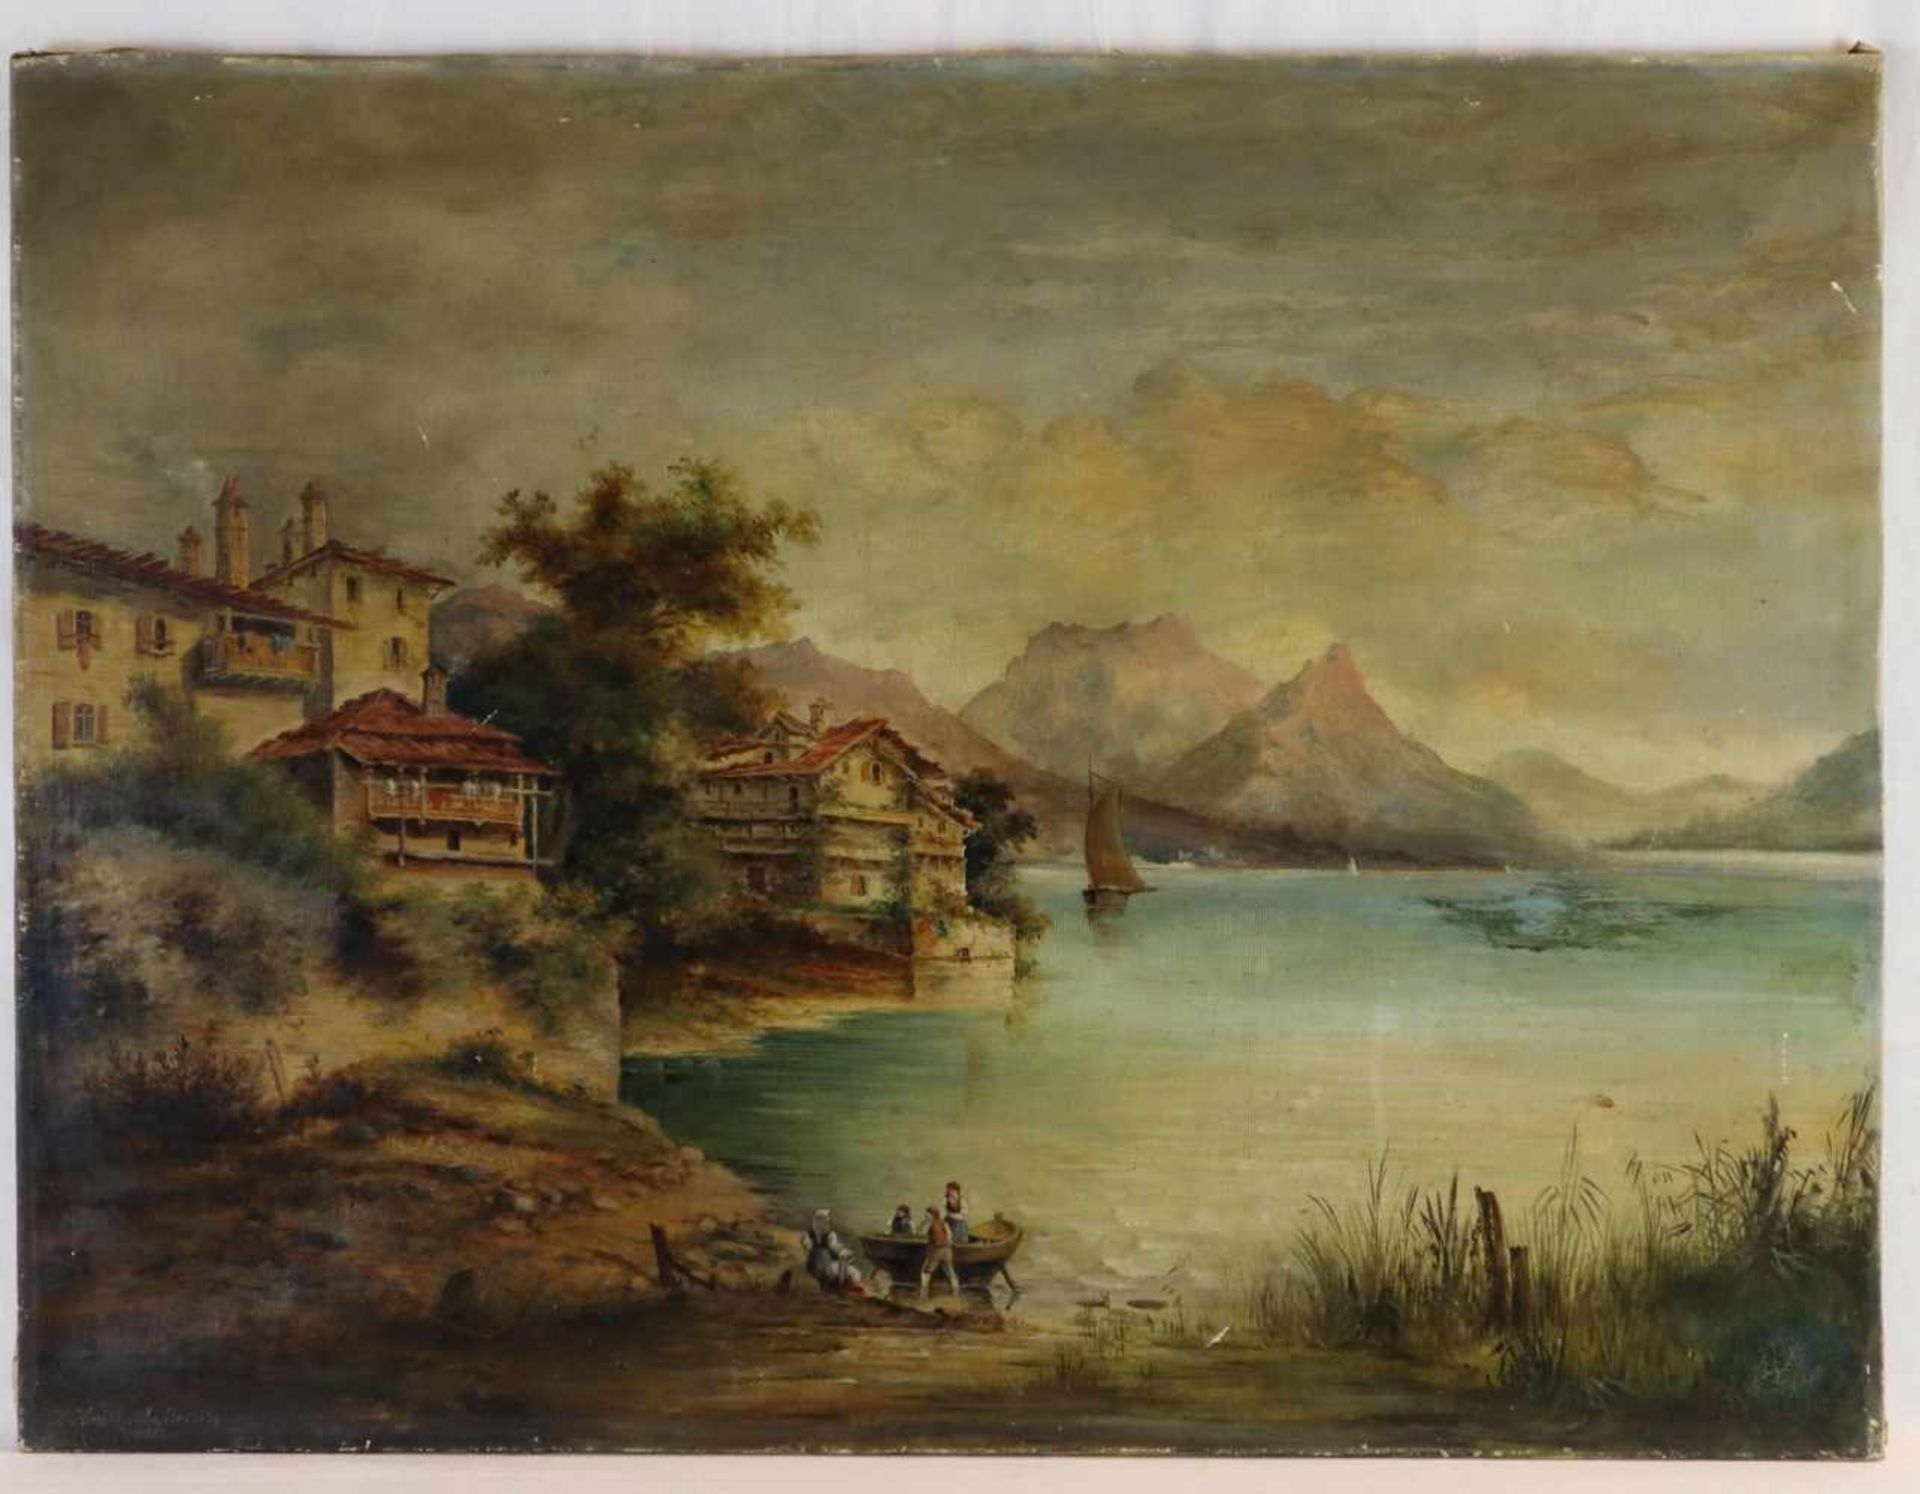 Krull, H. - Seenlandschaft vor Bergkulisse, Öl auf Leinwand, links unten signiert, datiert "1902"